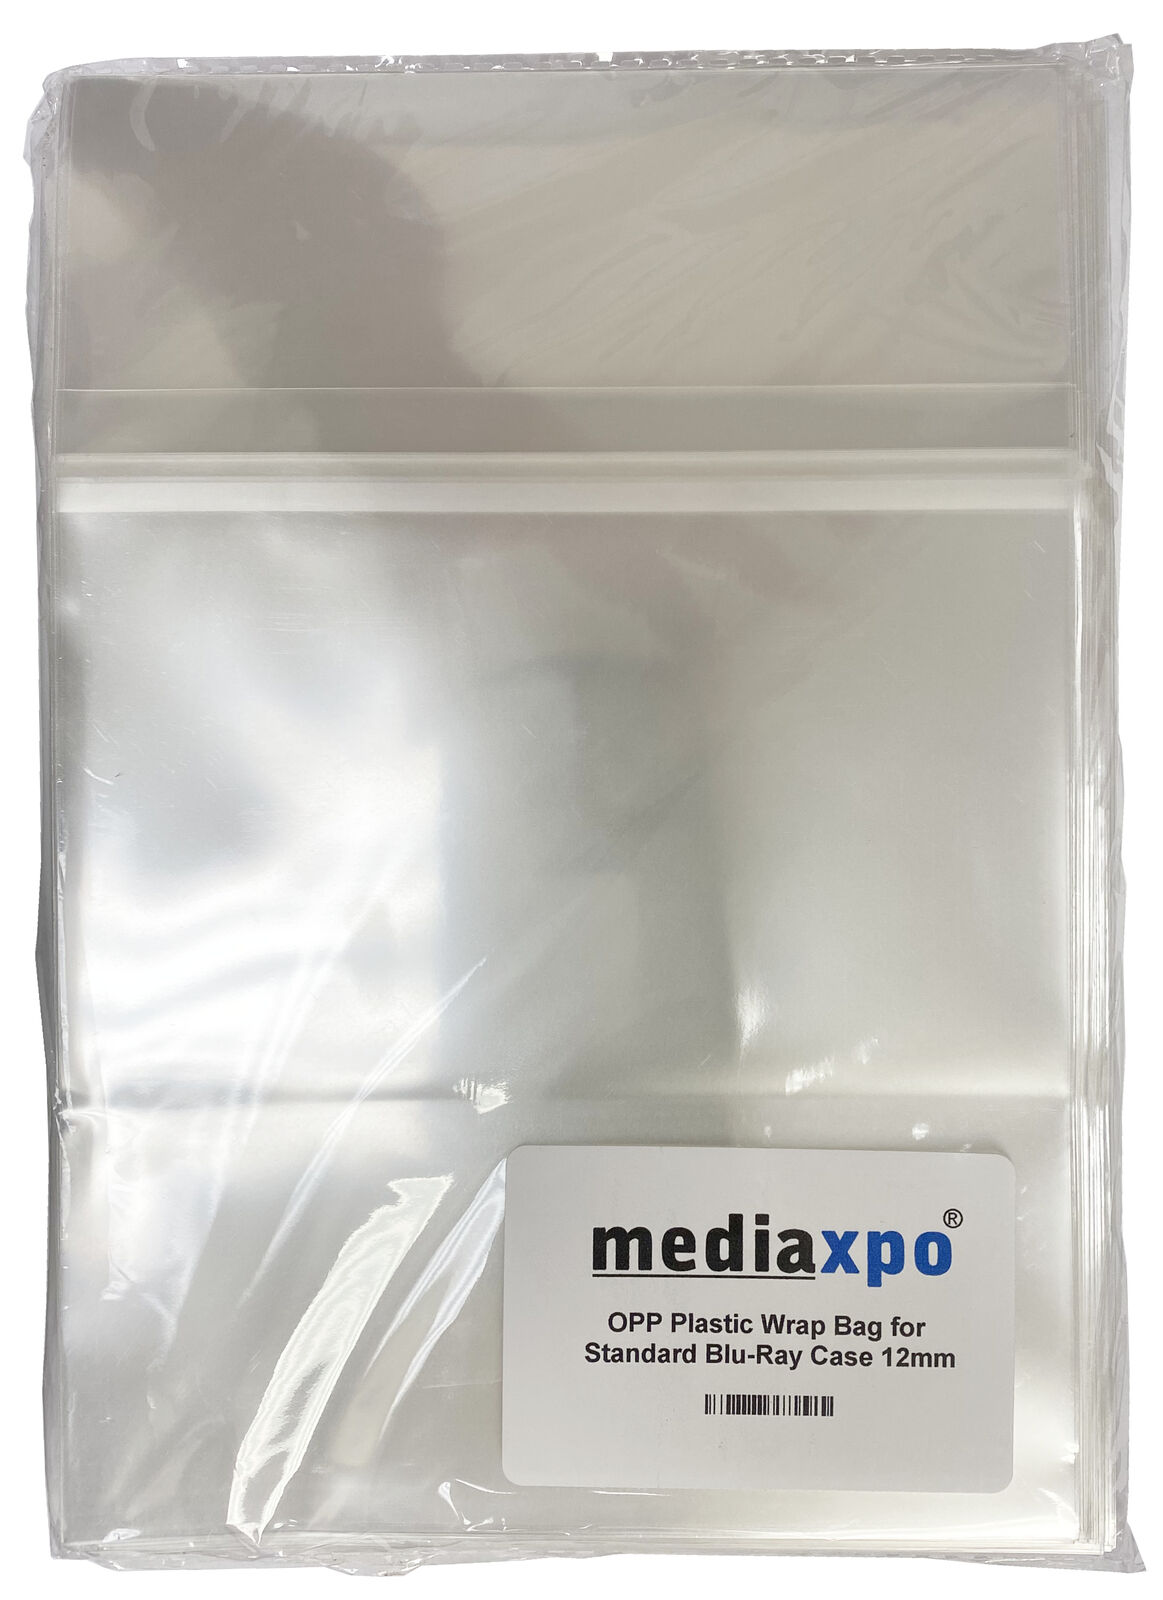 OPP Plastic Wrap Bag for Standard Blu-Ray Case 12mm Lot